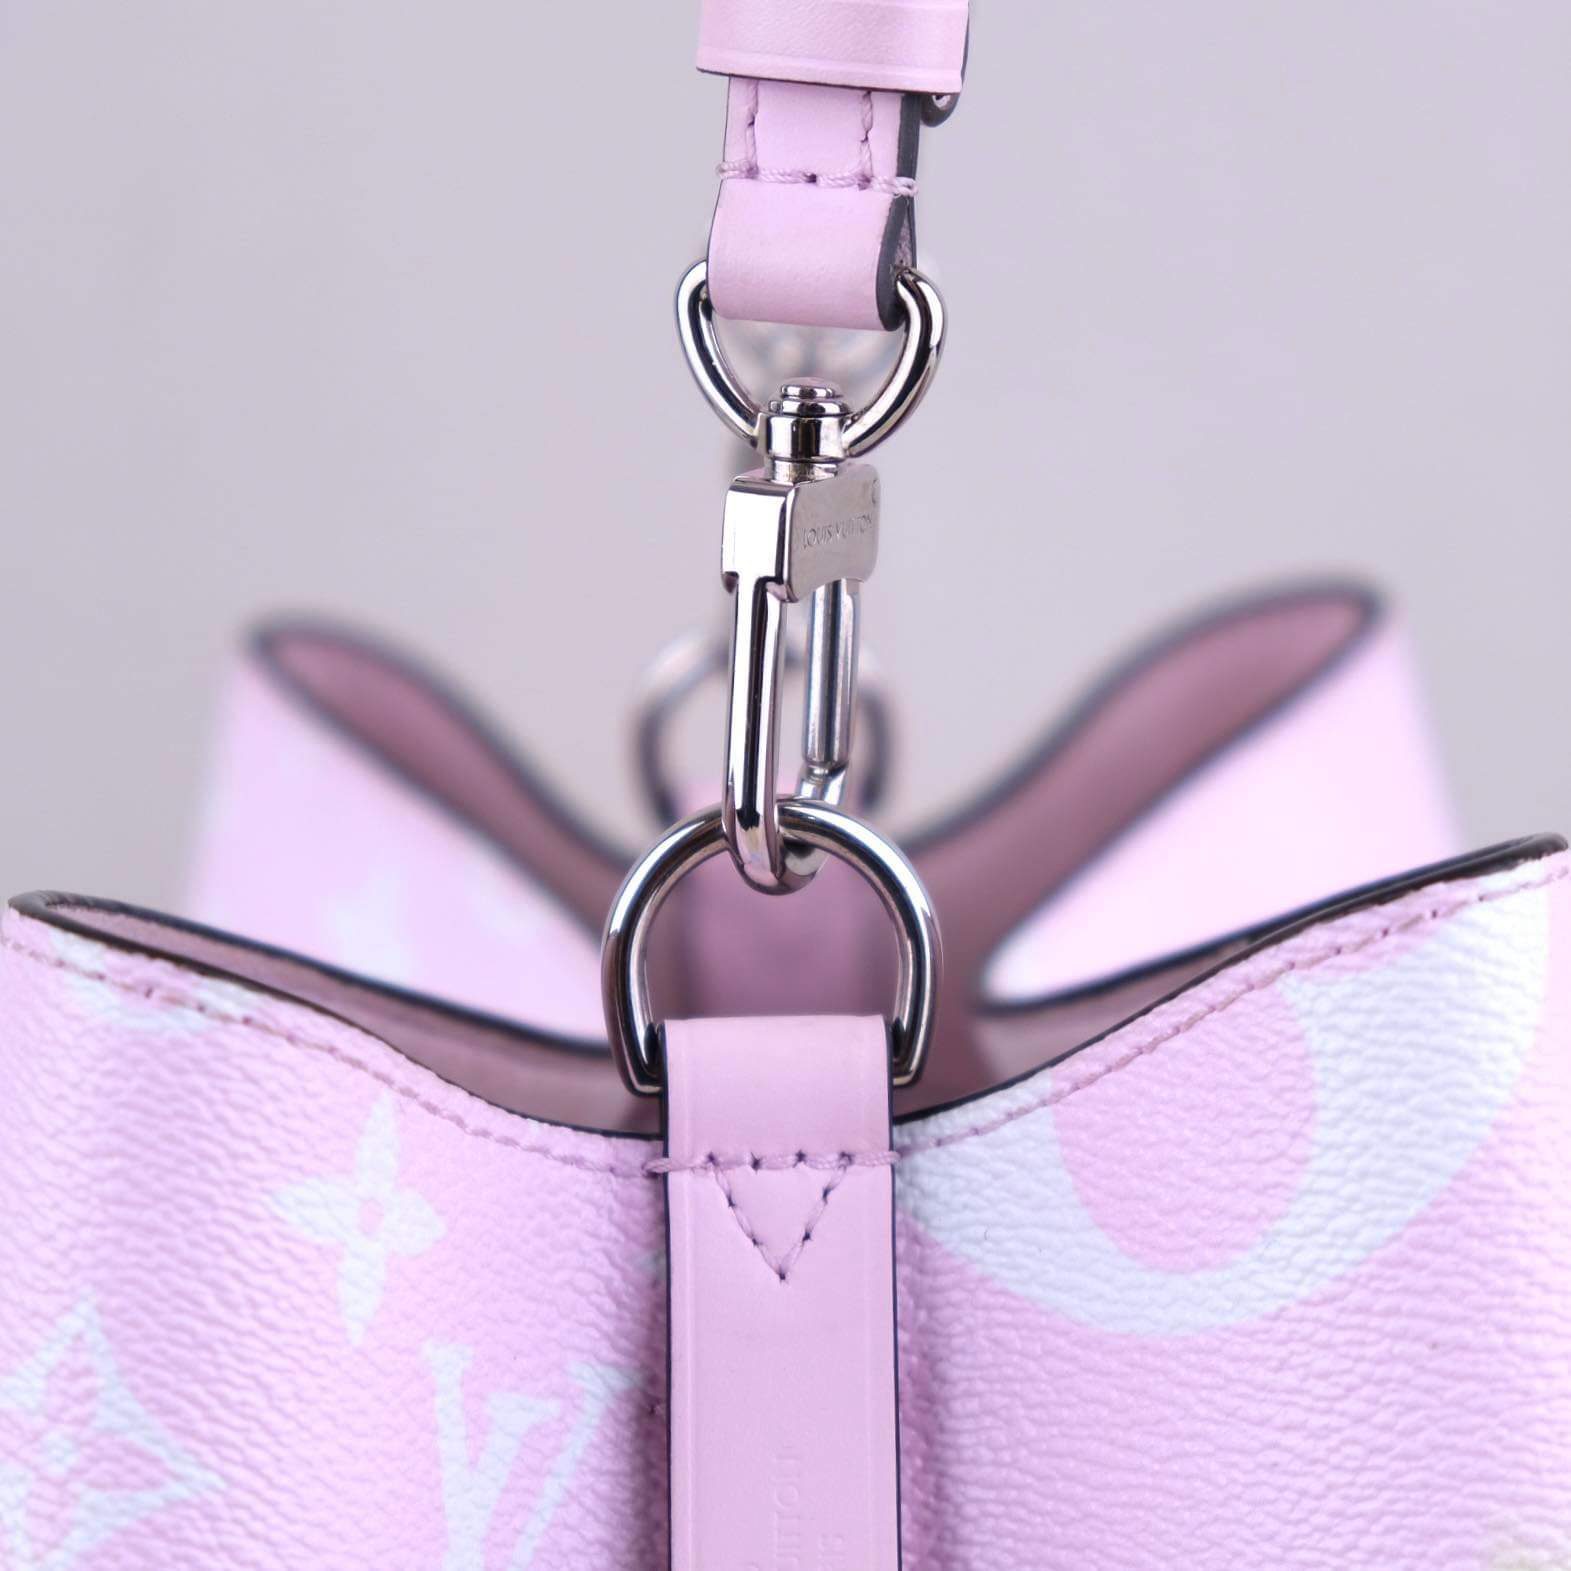 Pink Tie-Dye LV Leather Keychain